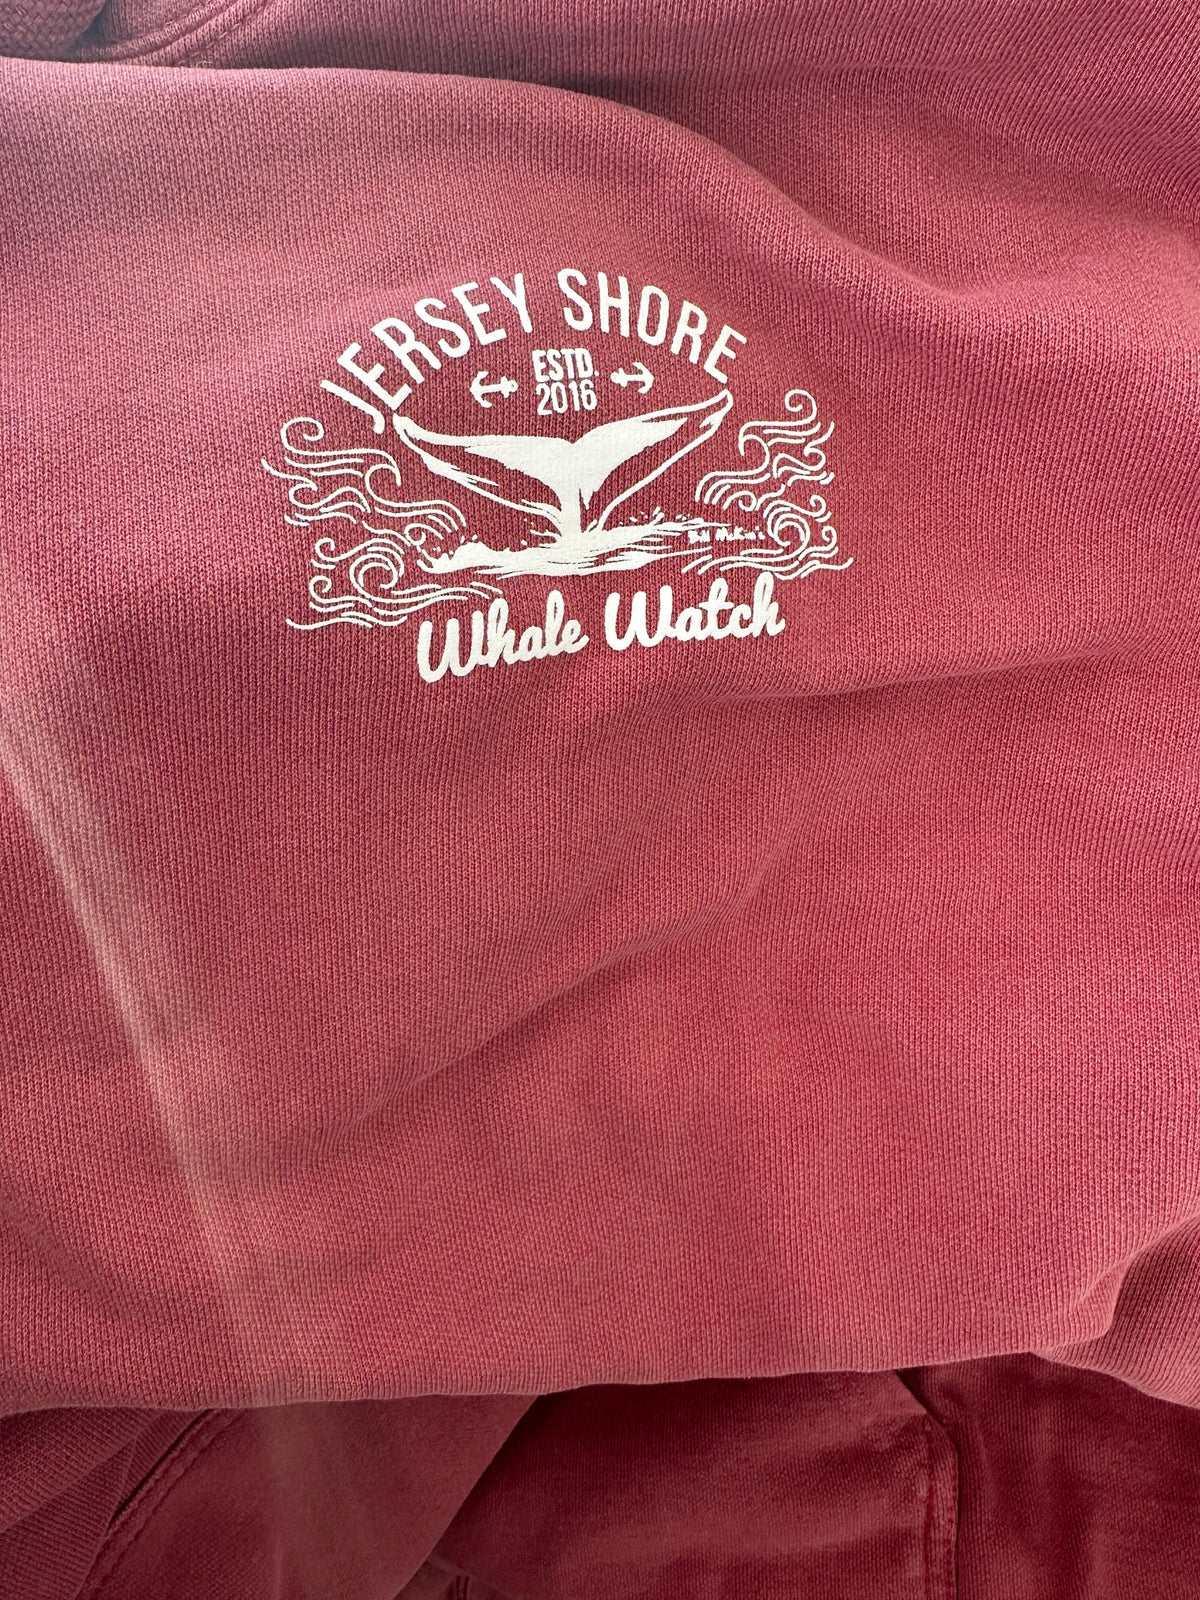 Flash Sale Classic Jersey Shore Whale Watch Sweatshirt printed both sides Bill McKim Photography Large Brick Red 